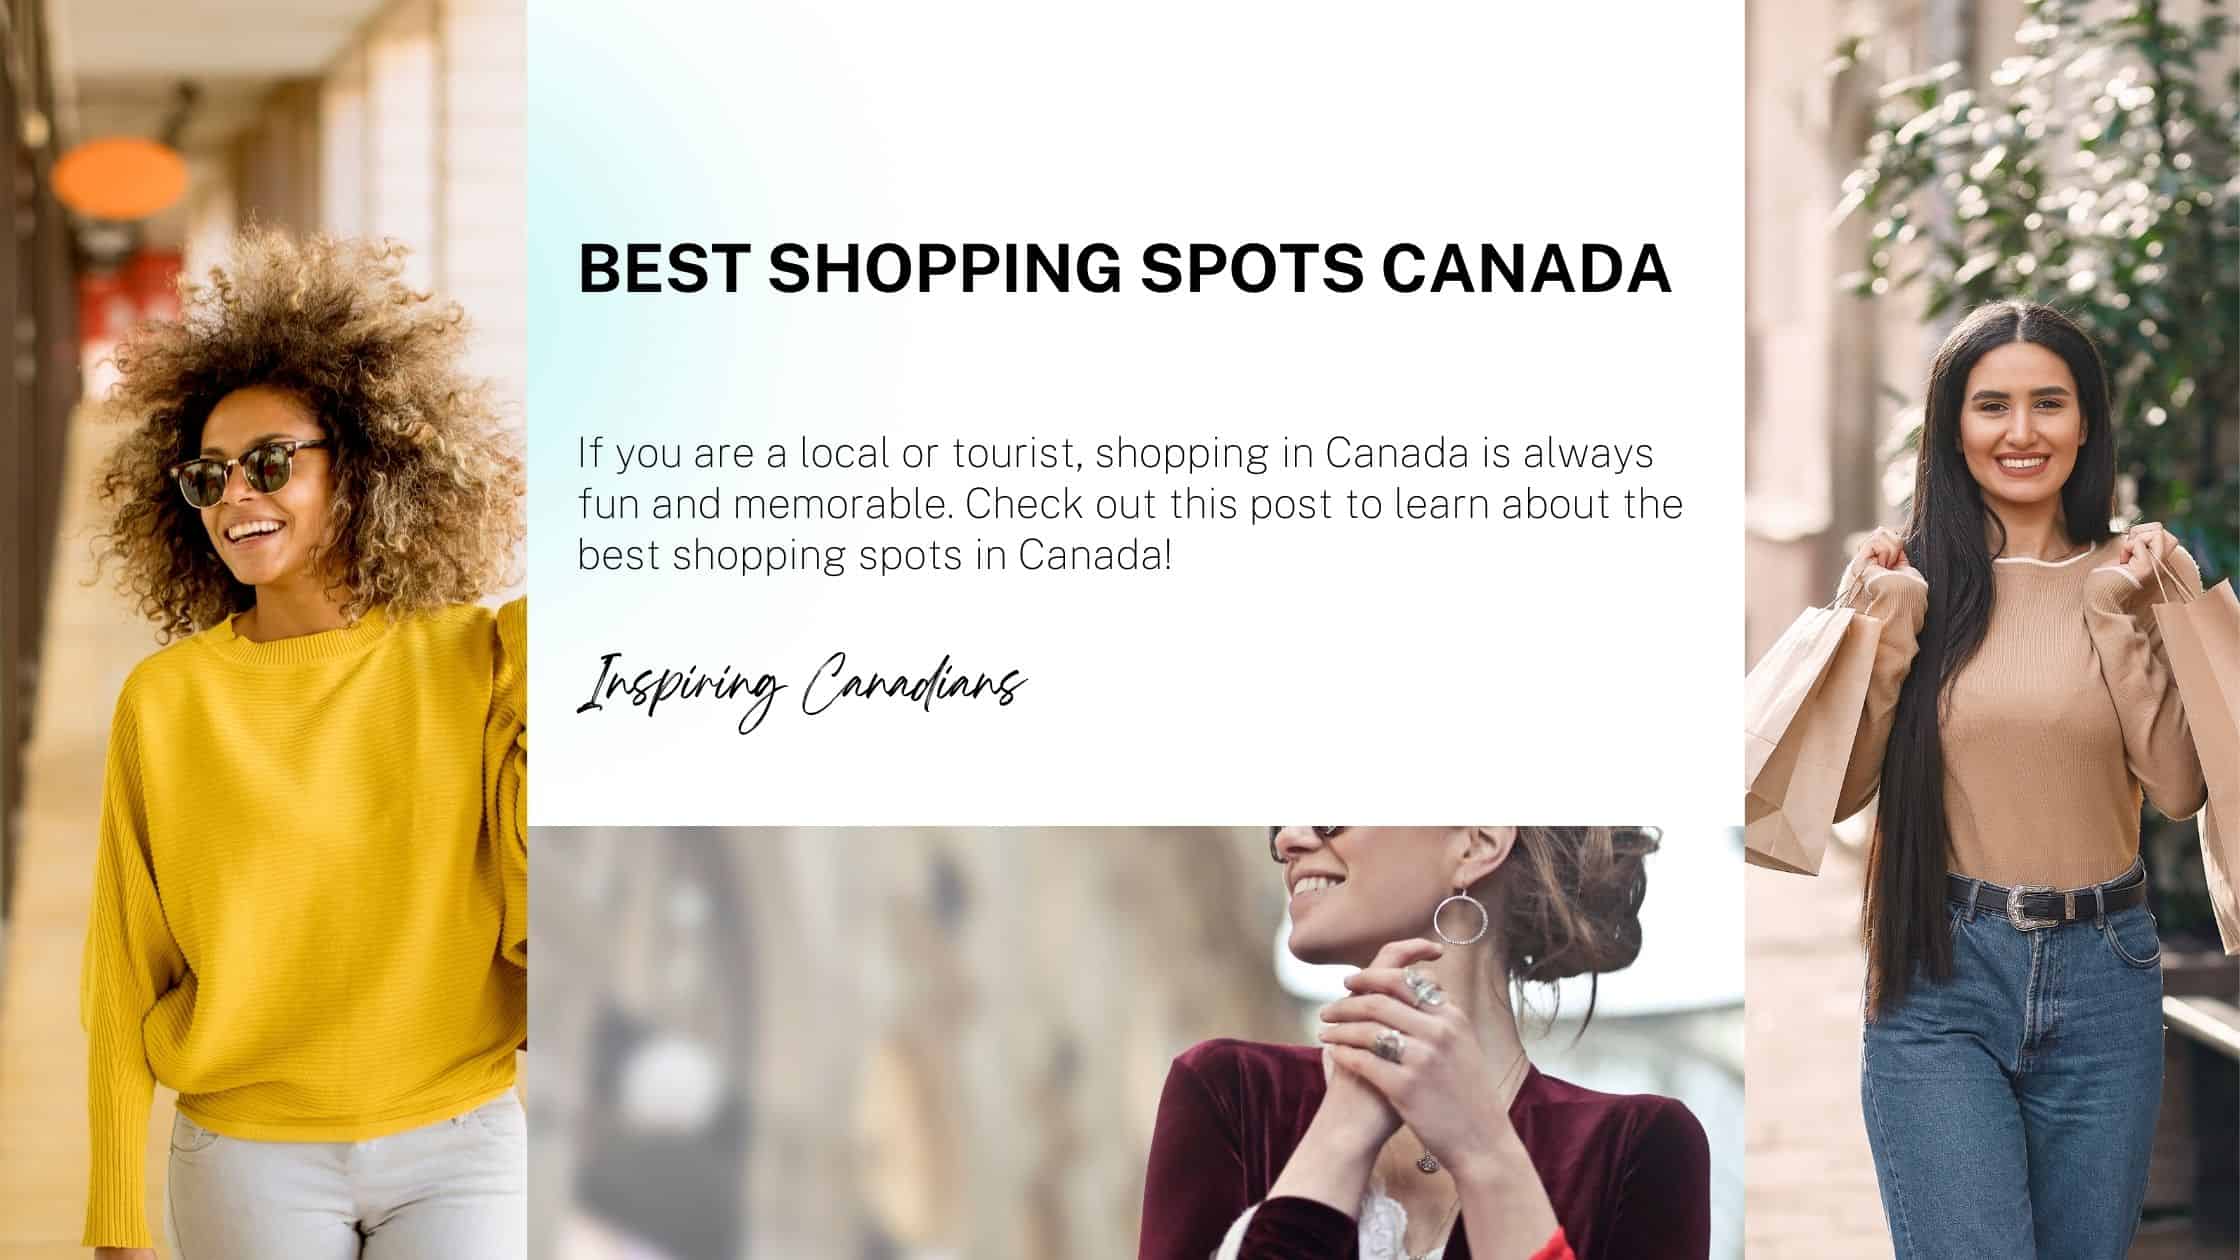 Best Shopping Spots Canada